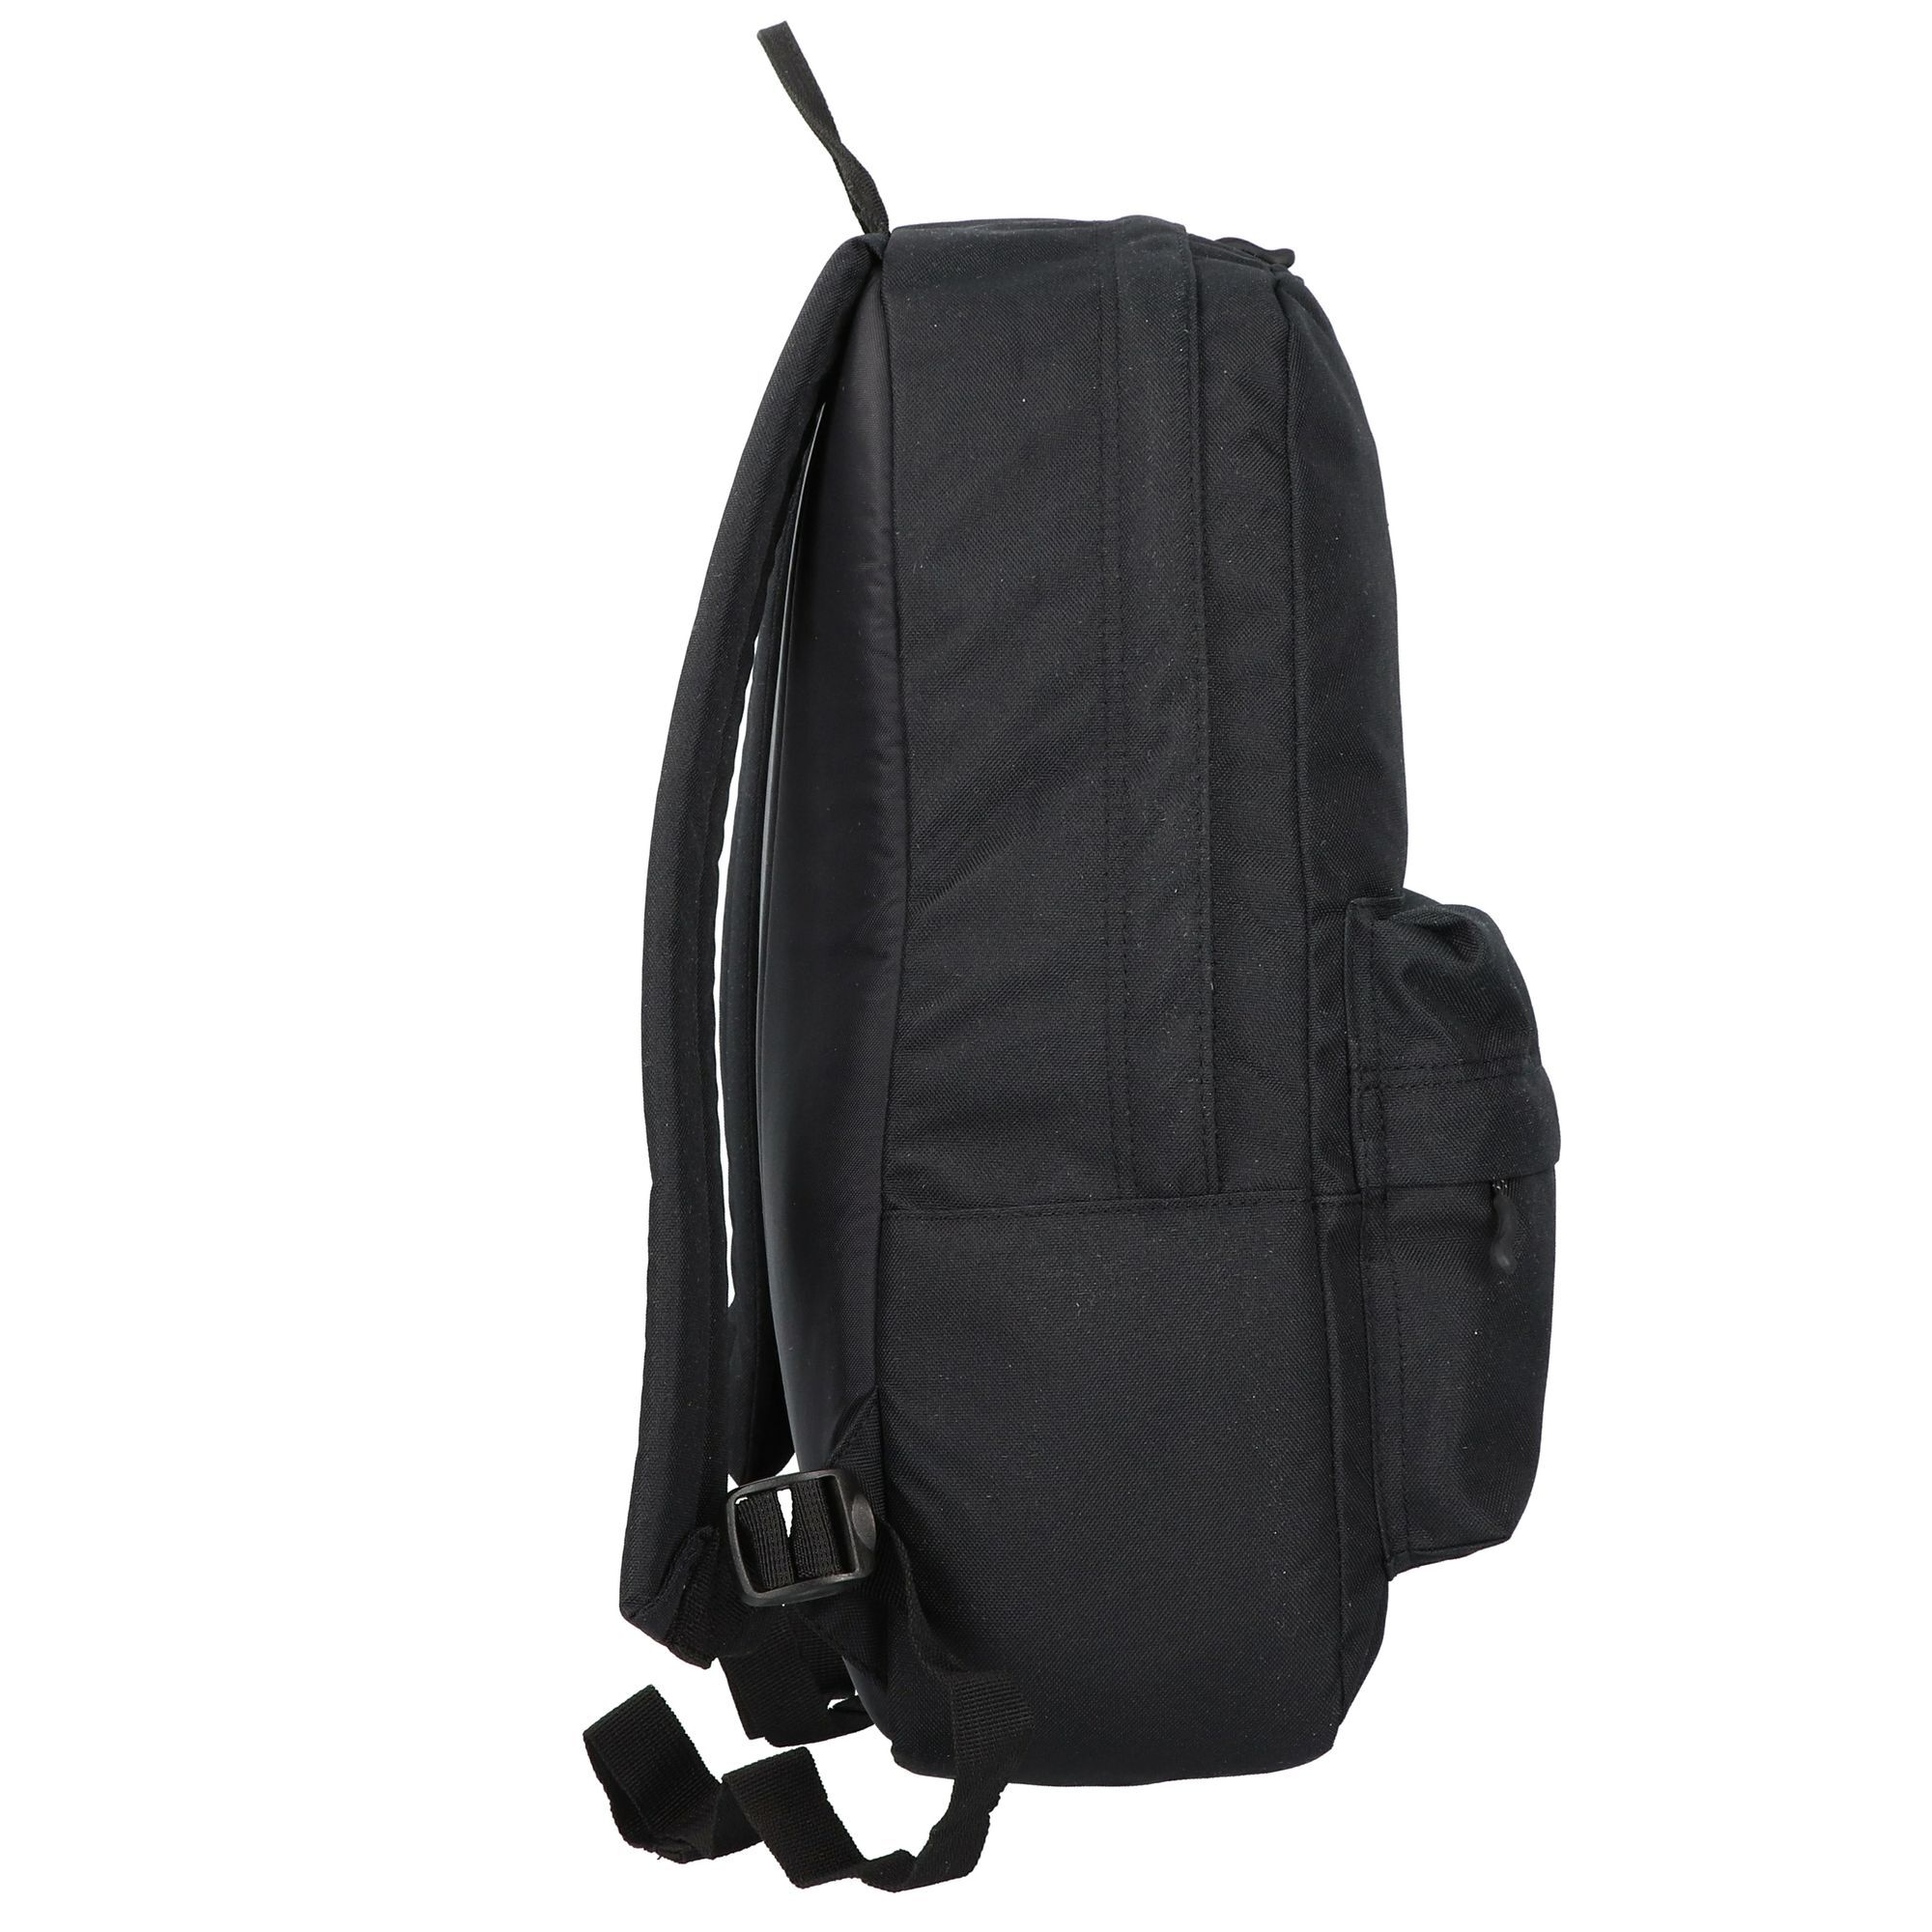 Рюкзак Dakine 365 Pack 21L 46 cm Laptopfach, цвет black ii рюкзак wenger crango 46 cm laptopfach цвет gravity black